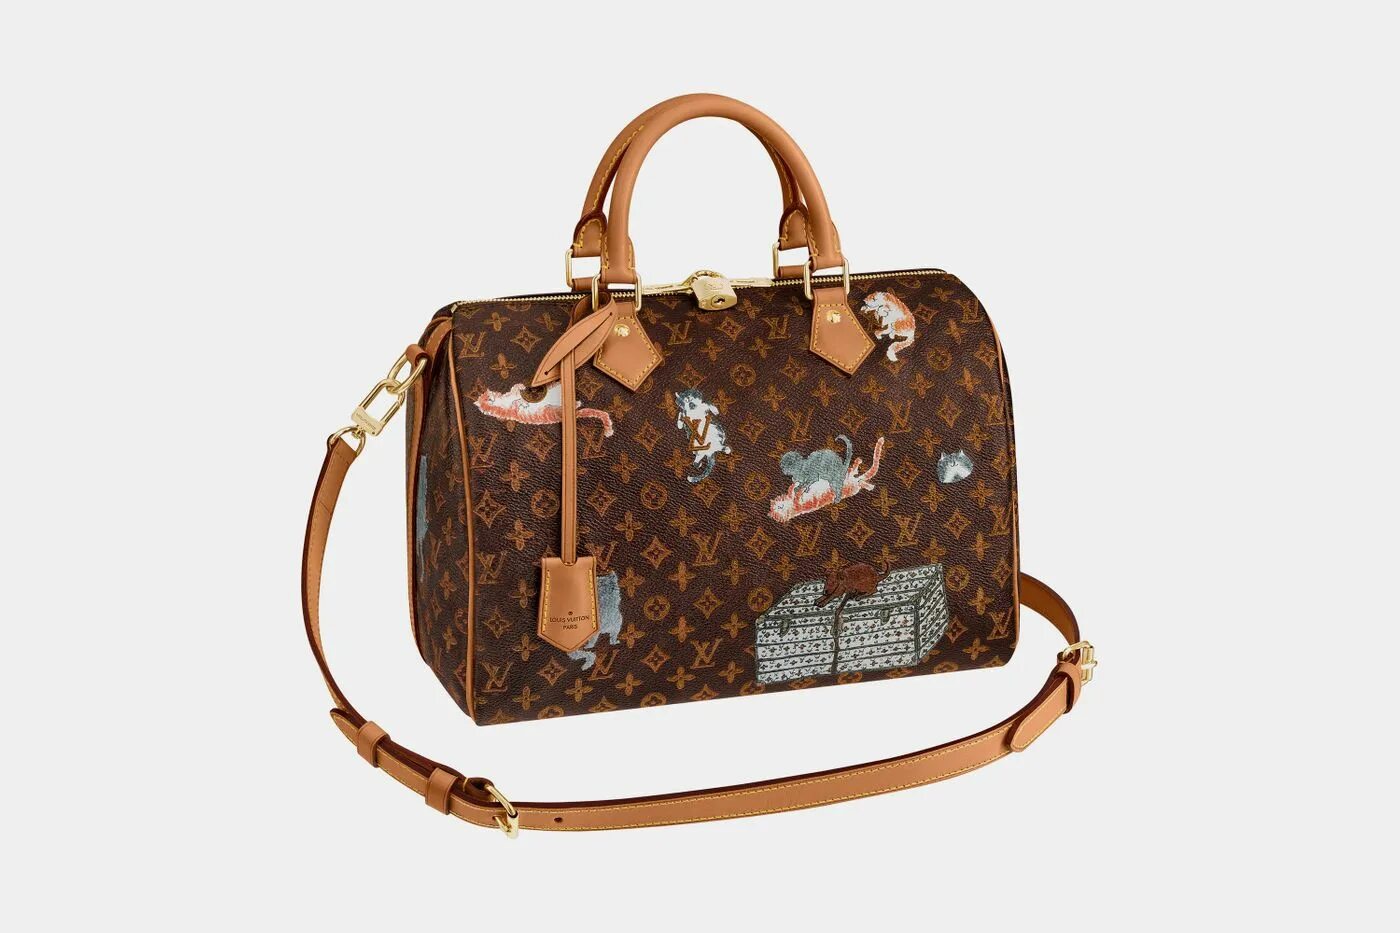 Сумка луи виттон цум. Сумка Луи Виттон Спиди. Louis Vuitton Grace Coddington сумка. Louis Vuitton ЦУМ. Louis Vuitton Bag collection.